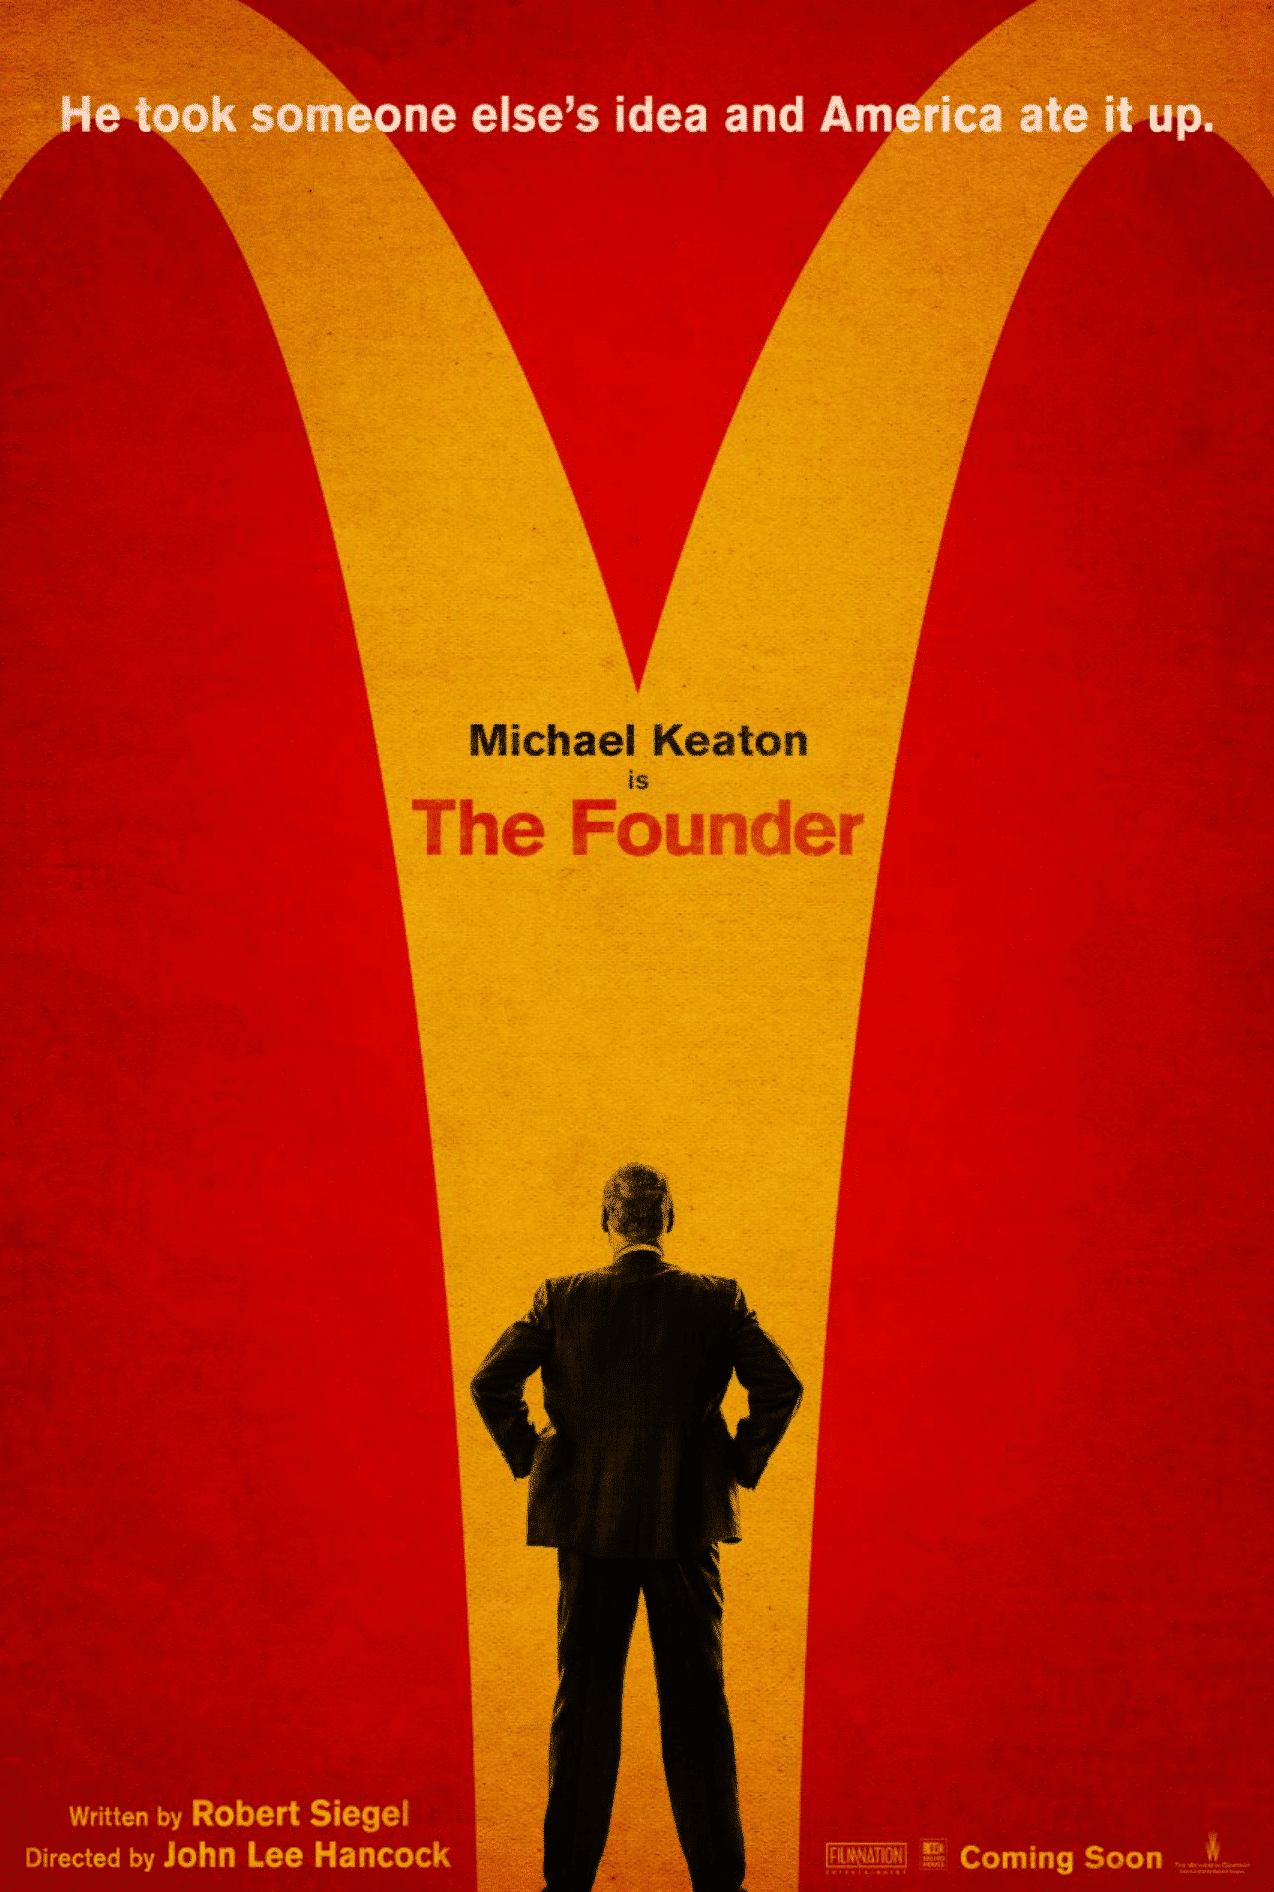 Filmtipp: The Founder mit Michael Keaton.